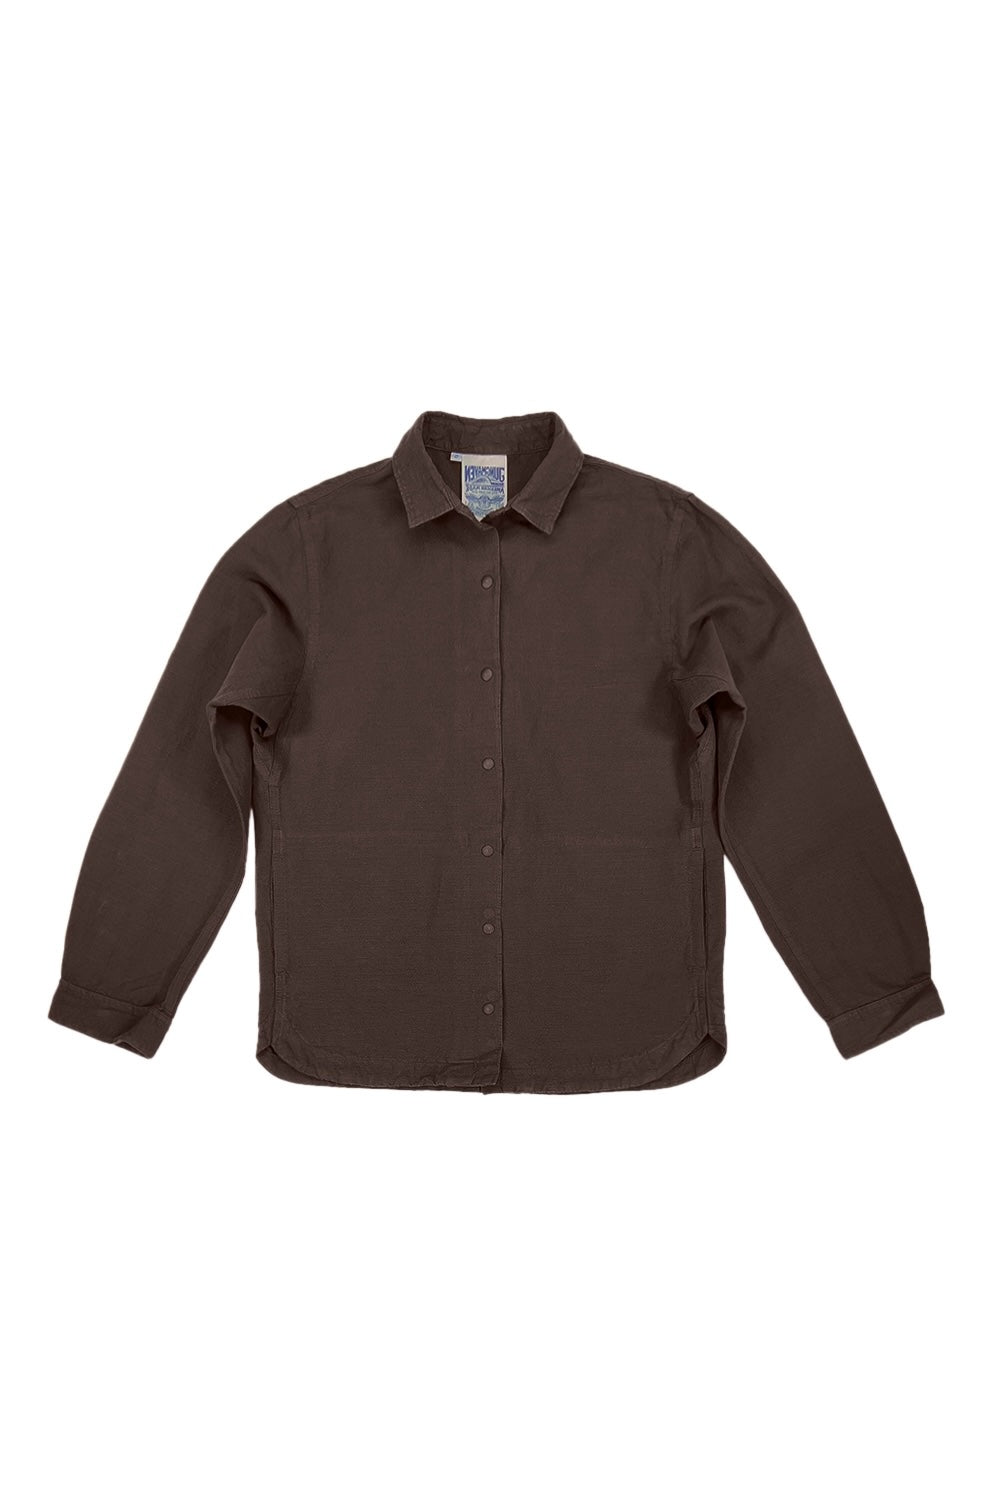 Sandpoint Snap Jacket | Jungmaven Hemp Clothing & Accessories / Color: Coffee Bean